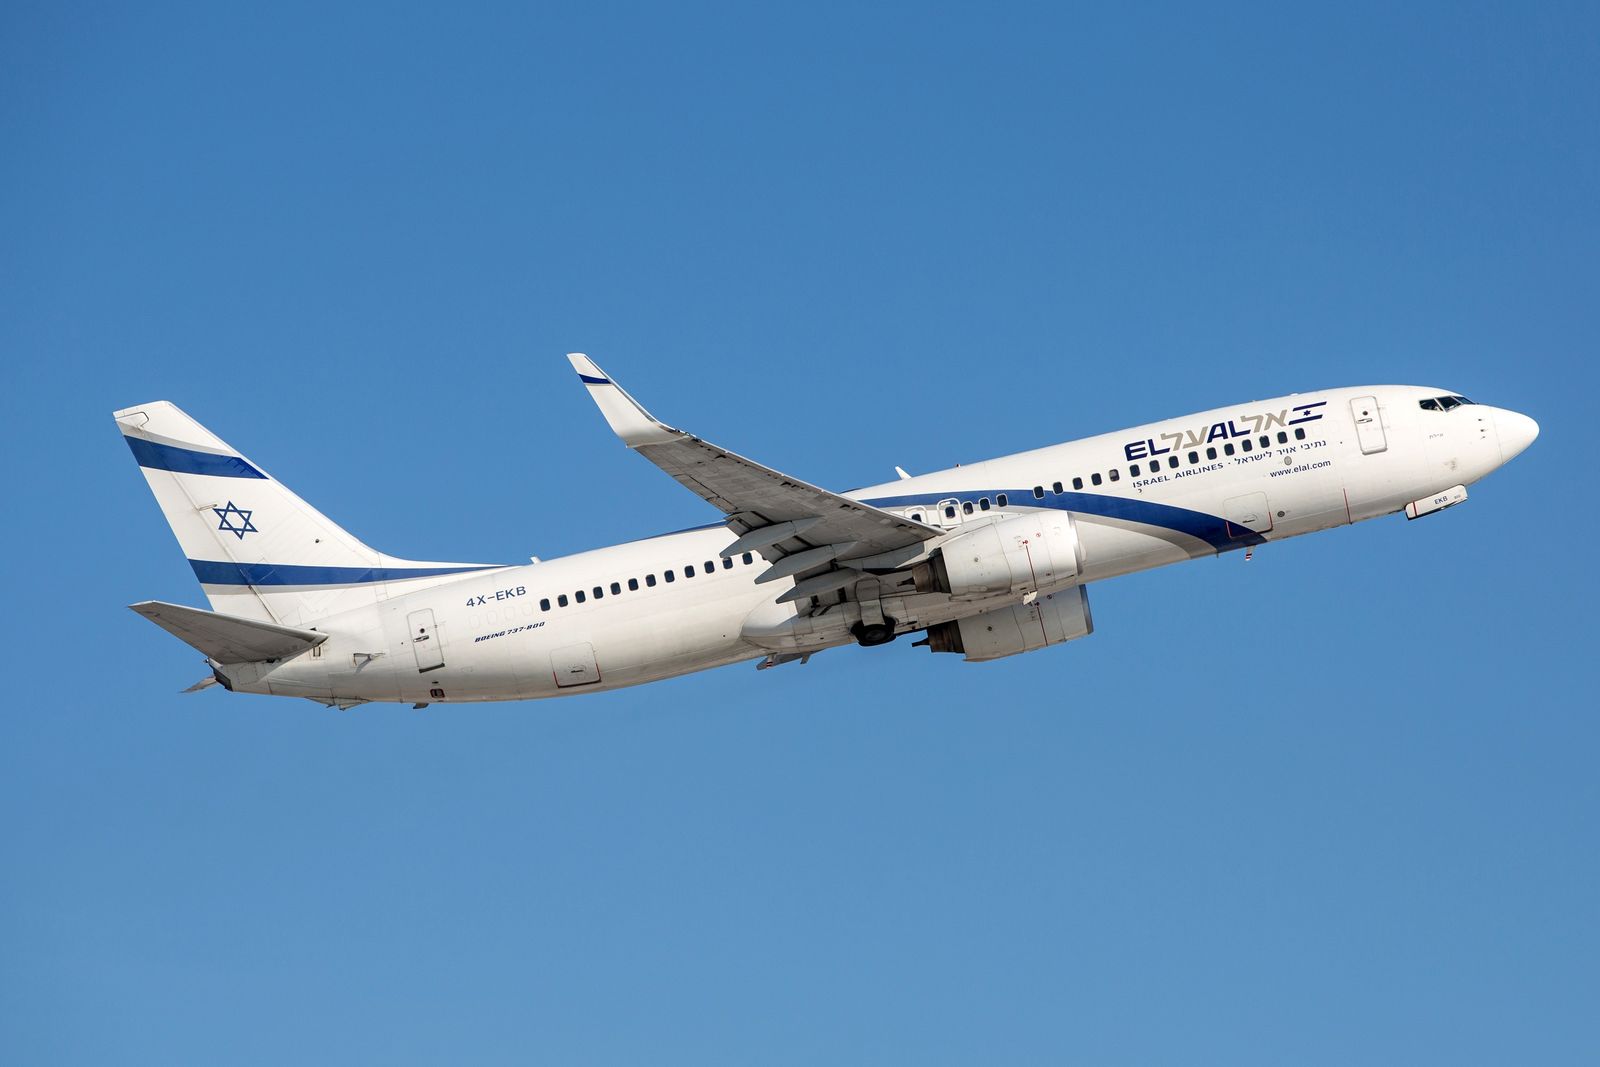 Israel’s national airline El Al